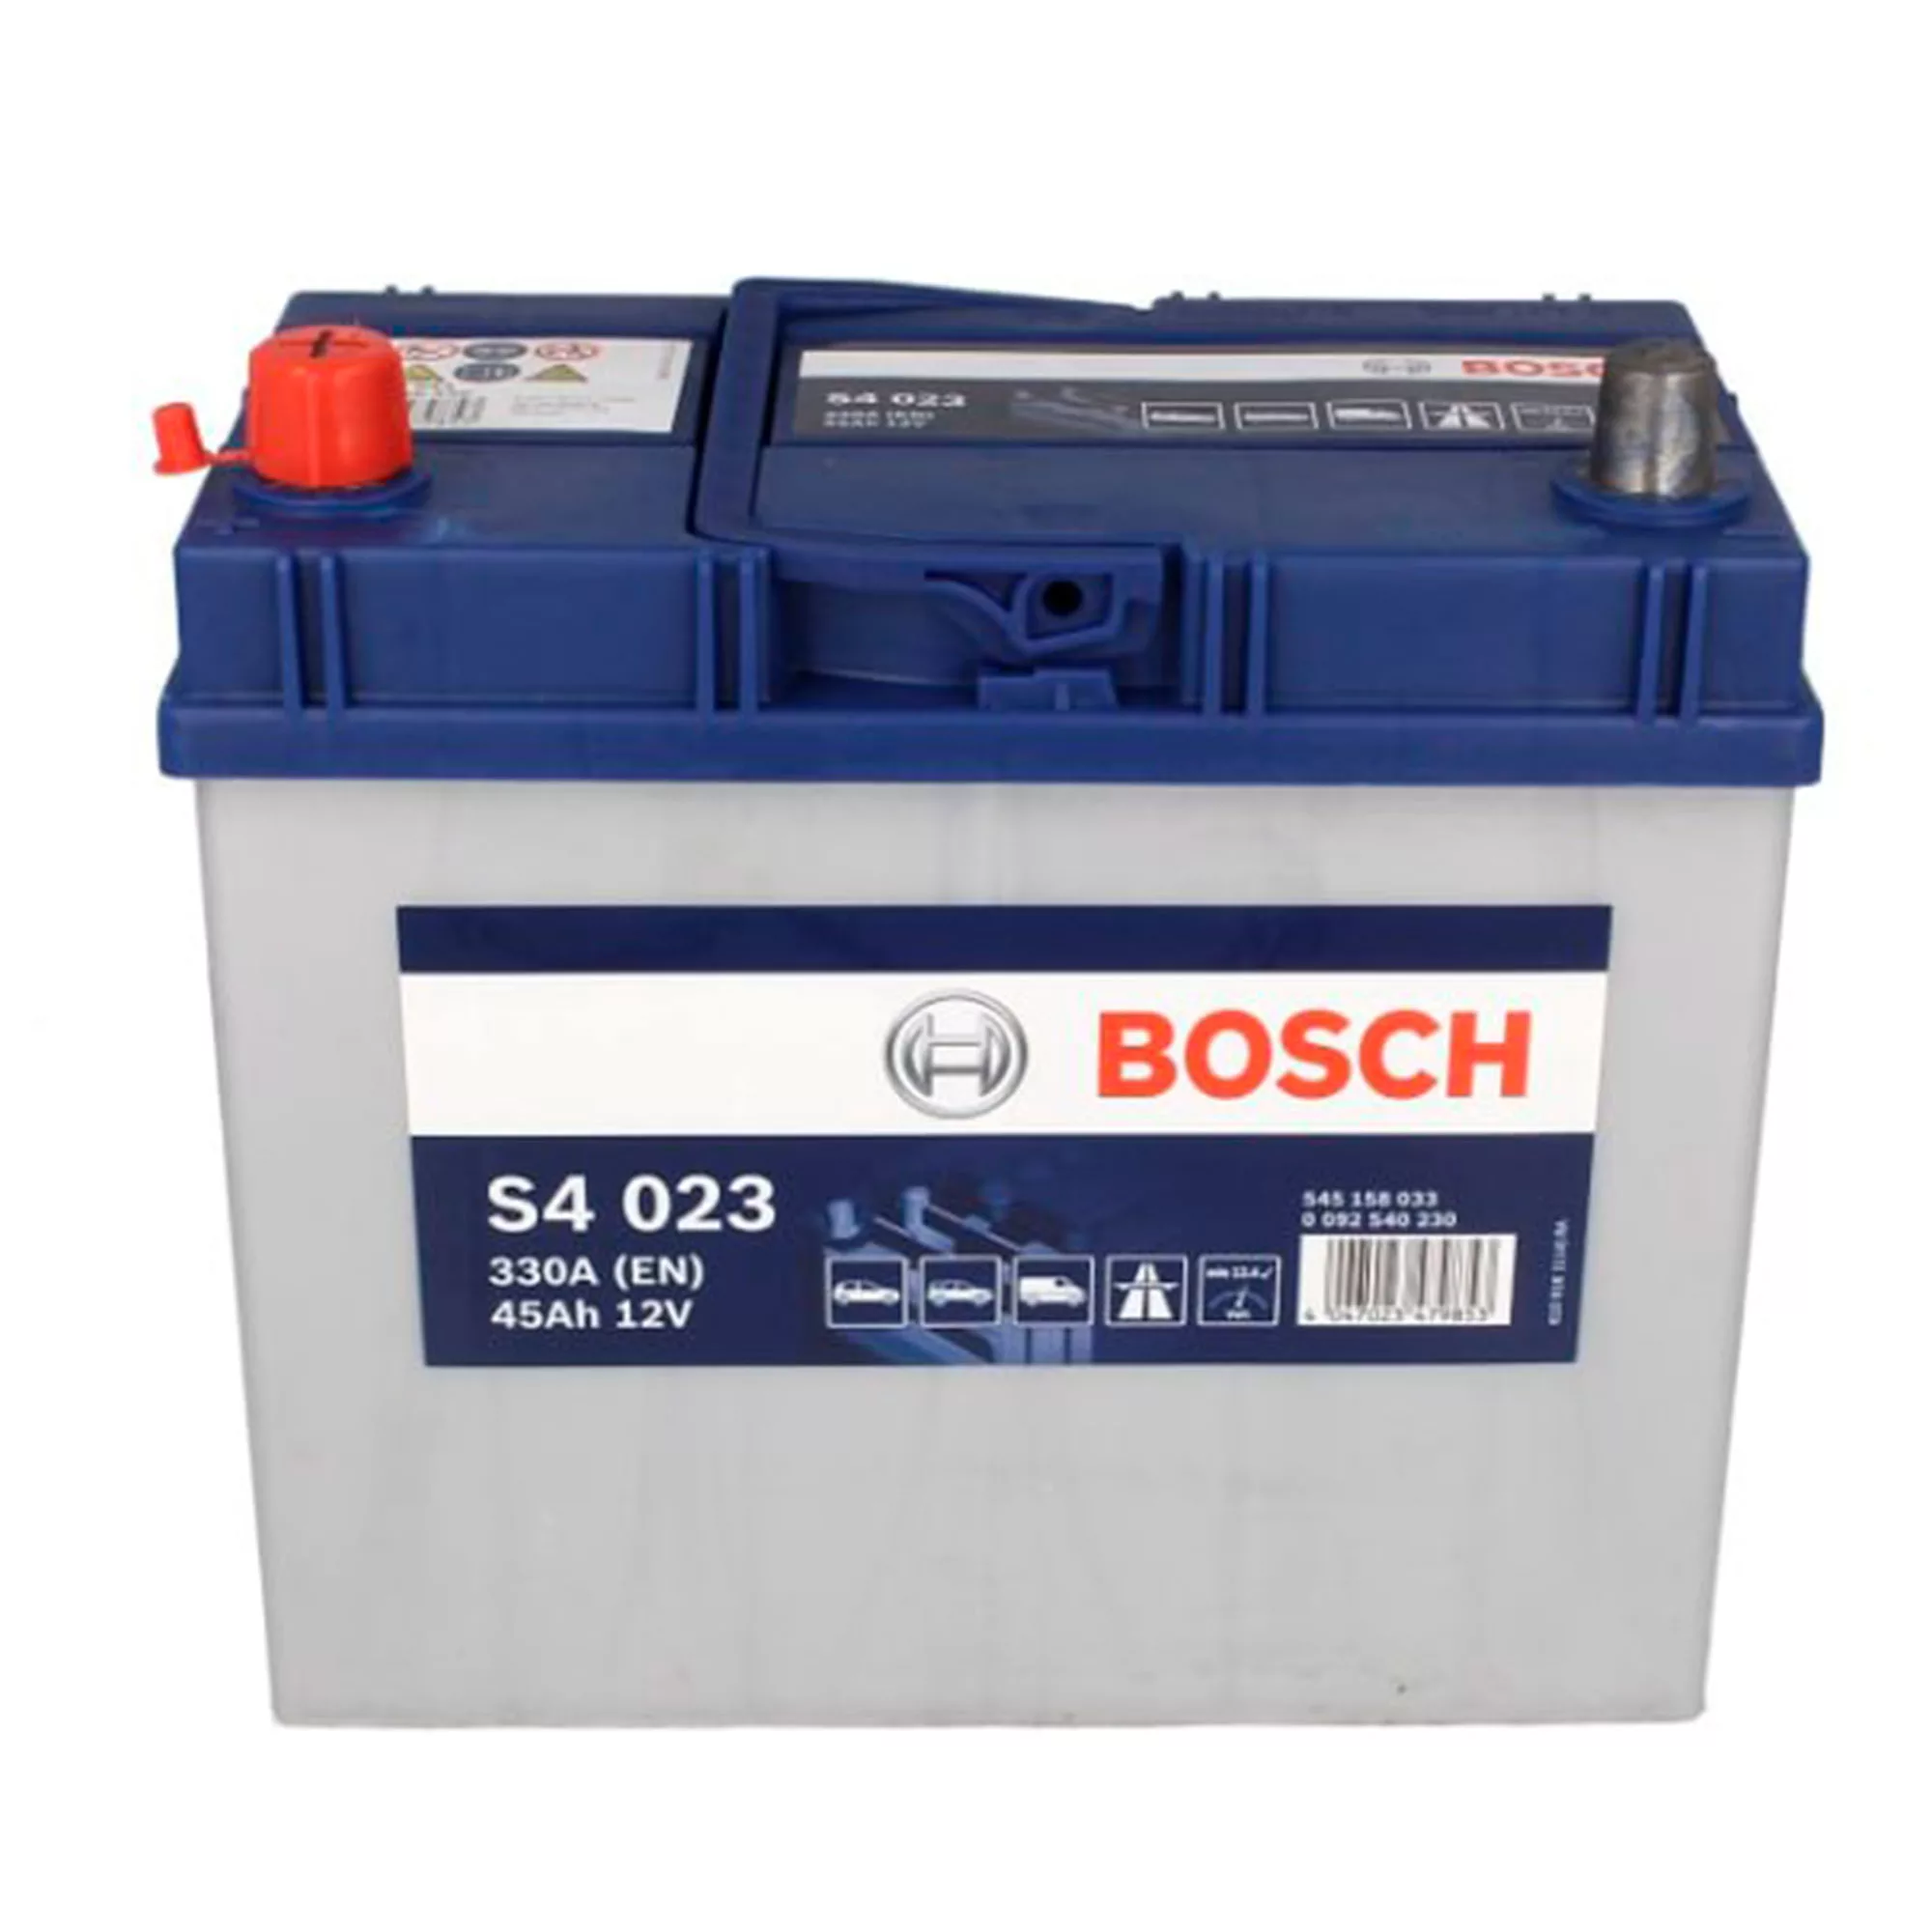 Автомобильный аккумулятор Bosch S4 (AD) 6CT-45 Аз Asia (0092S40230)